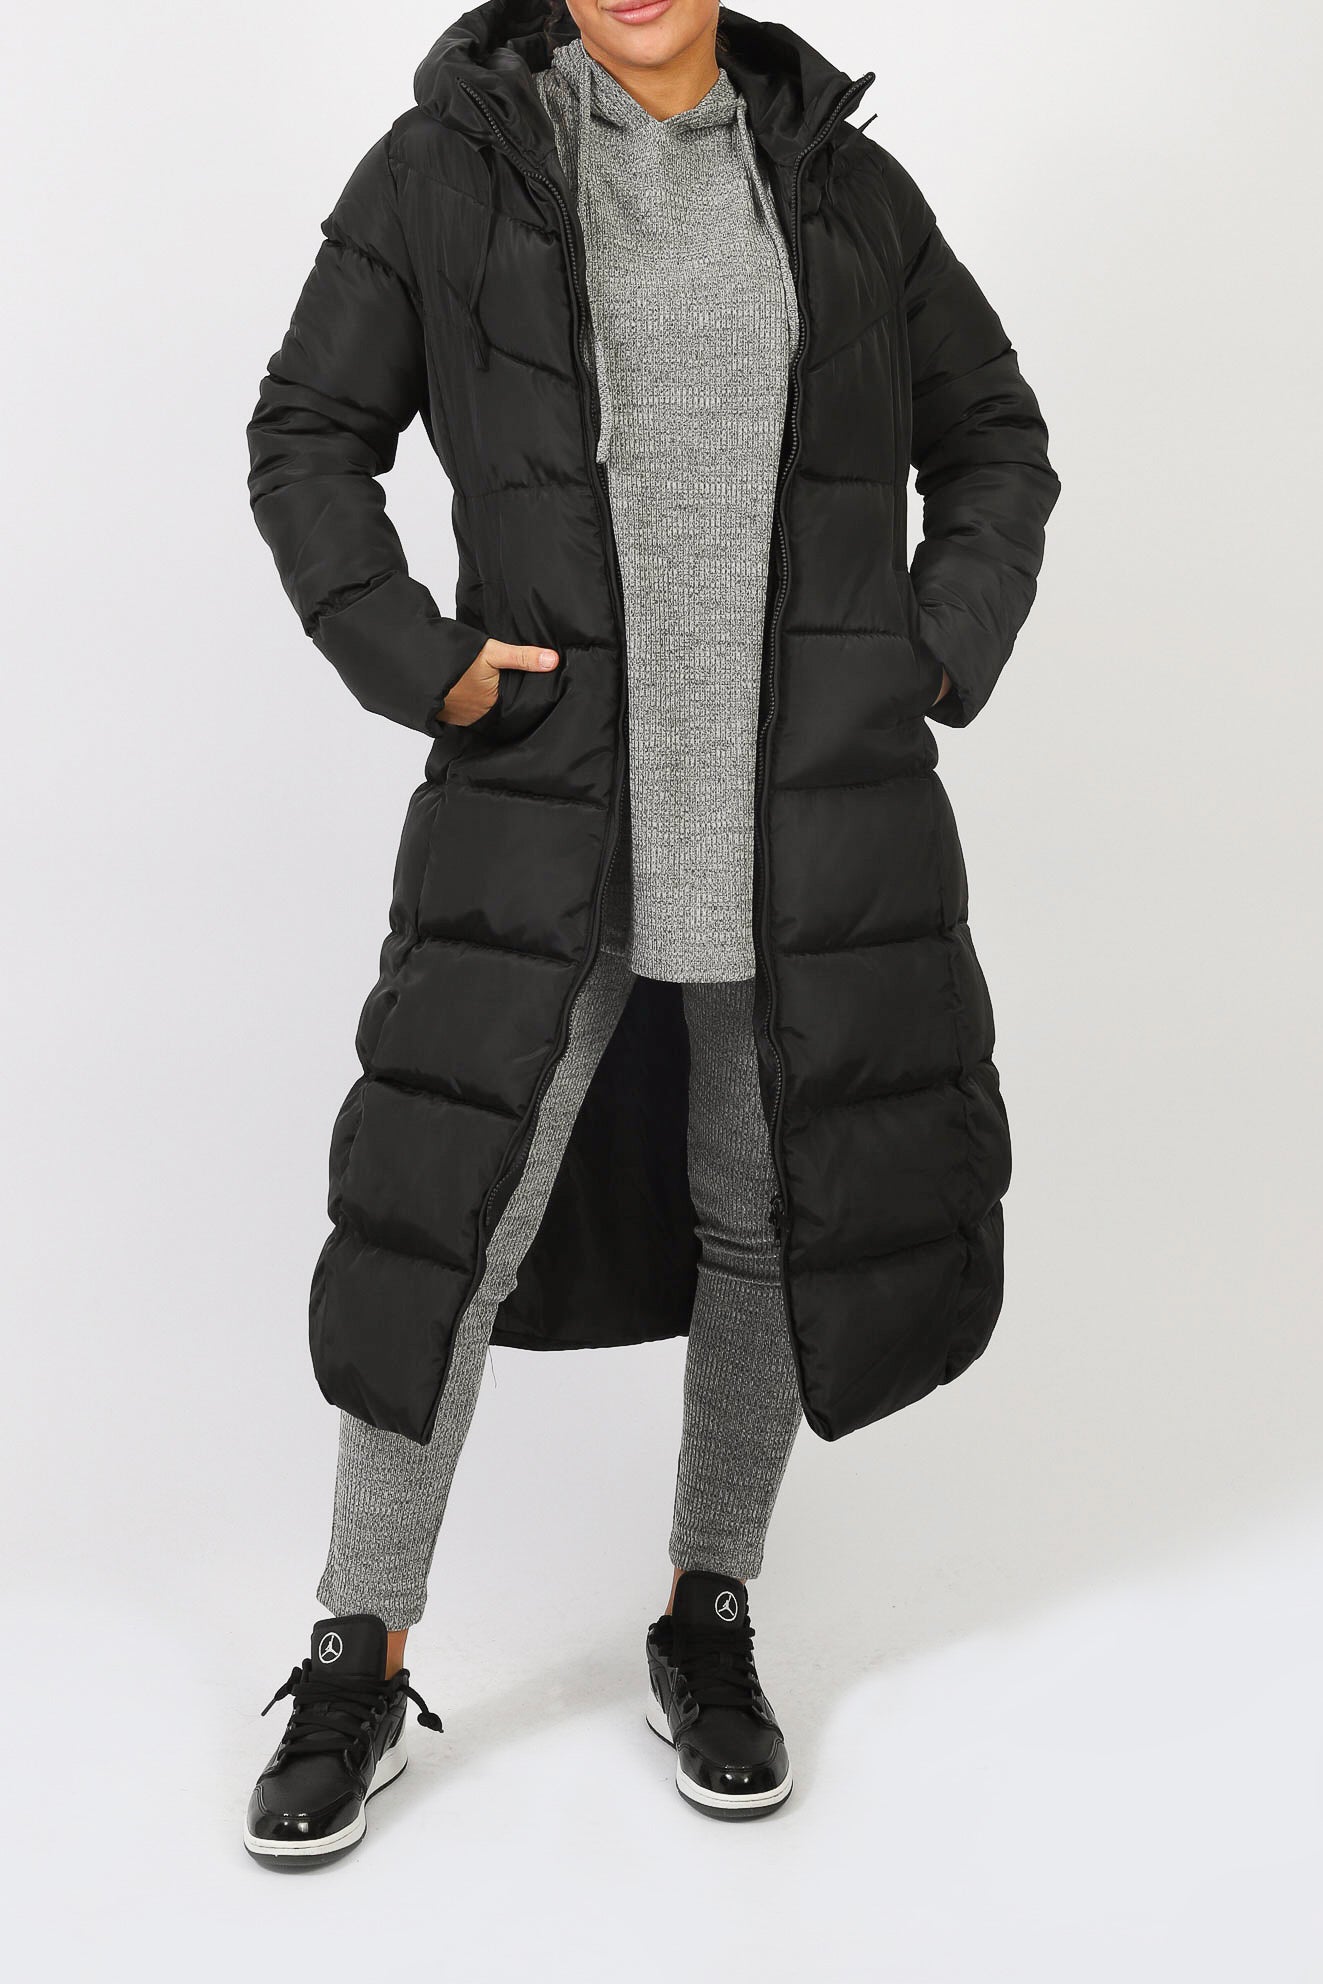 T00036Black-jacket-coat